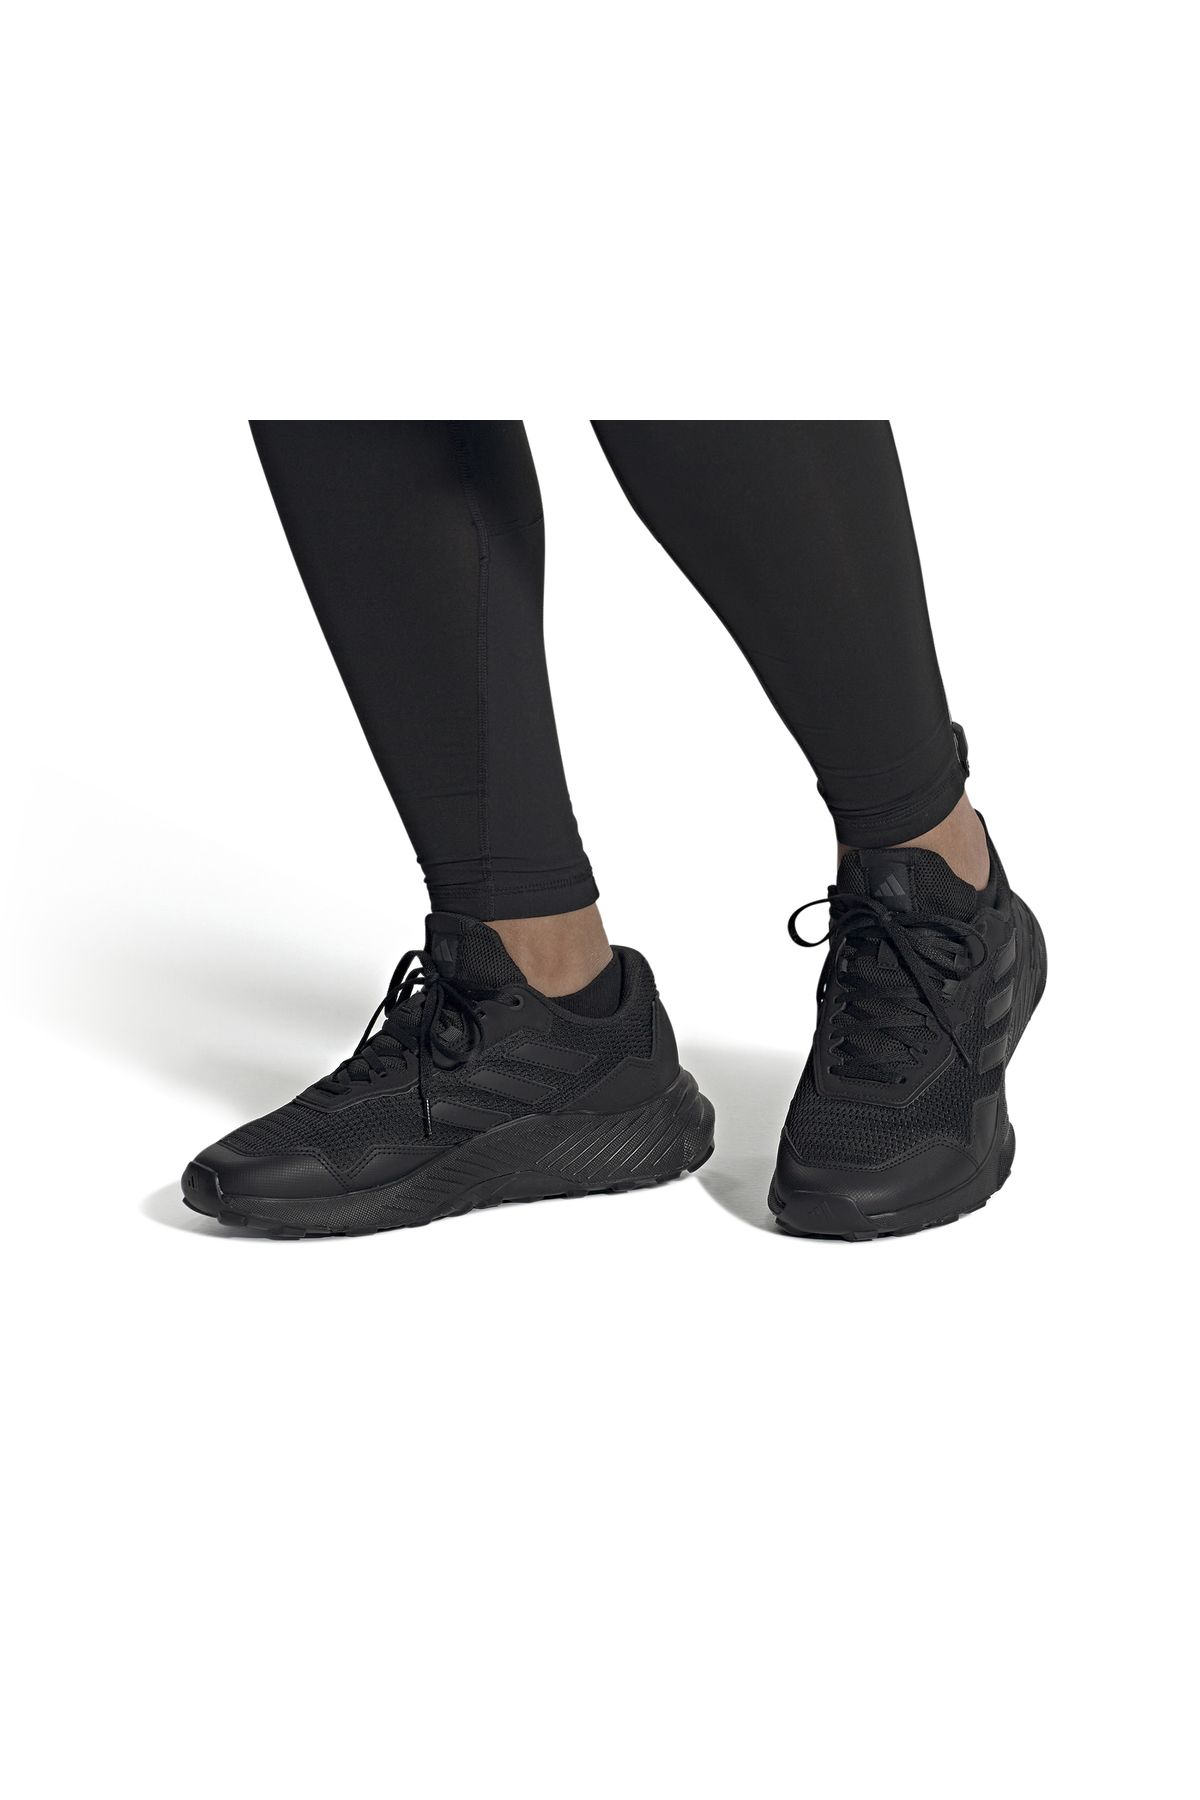 adidas Tracefinder Erkek Arazi Tipi Koşu Ayakkabısı IF0553 Siyah